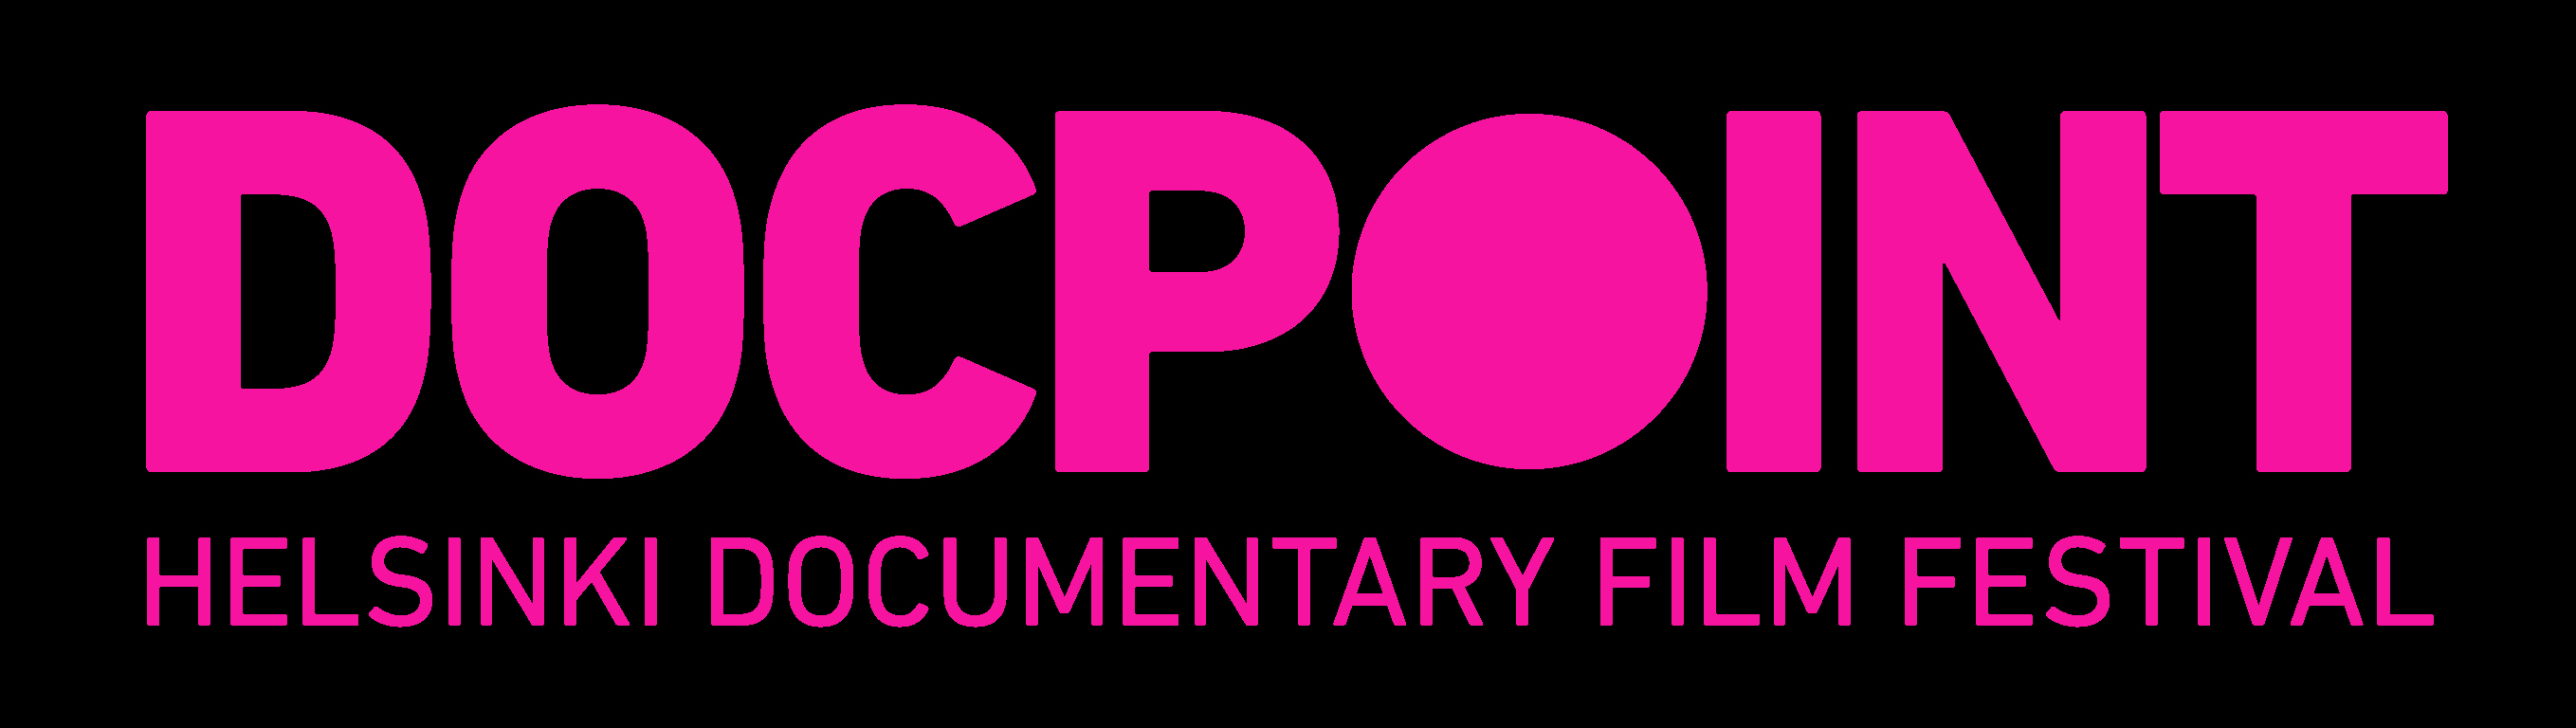 docpoint-logo_pink_rgb2.jpg (396 KB)